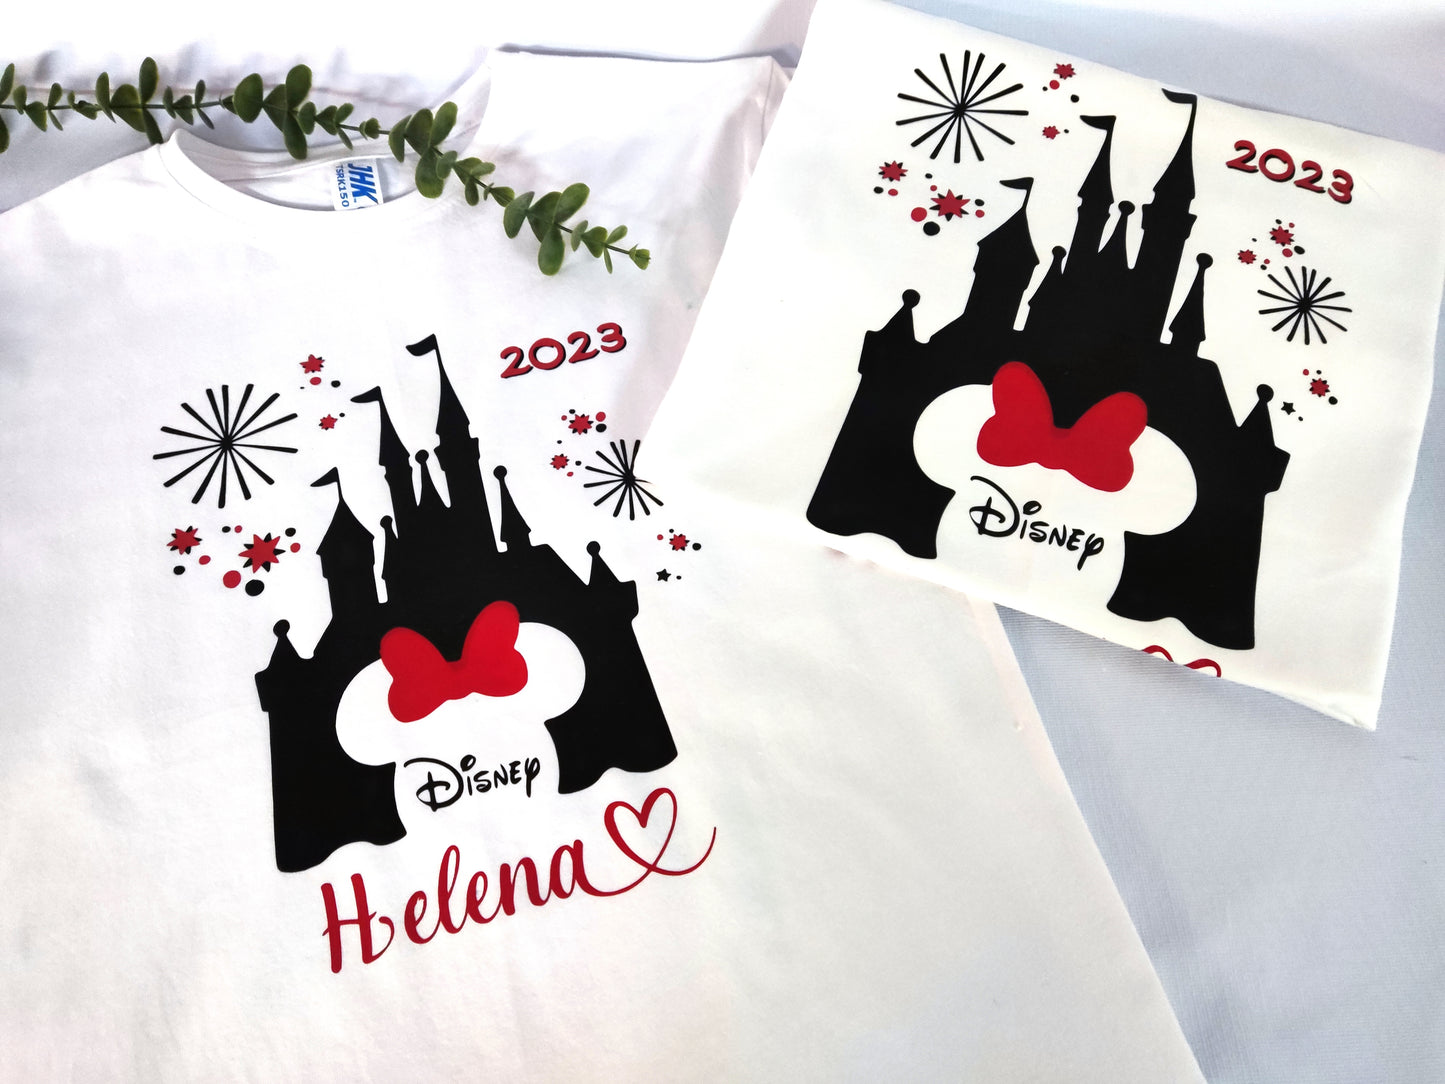 Camiseta viaje a Disney castillo